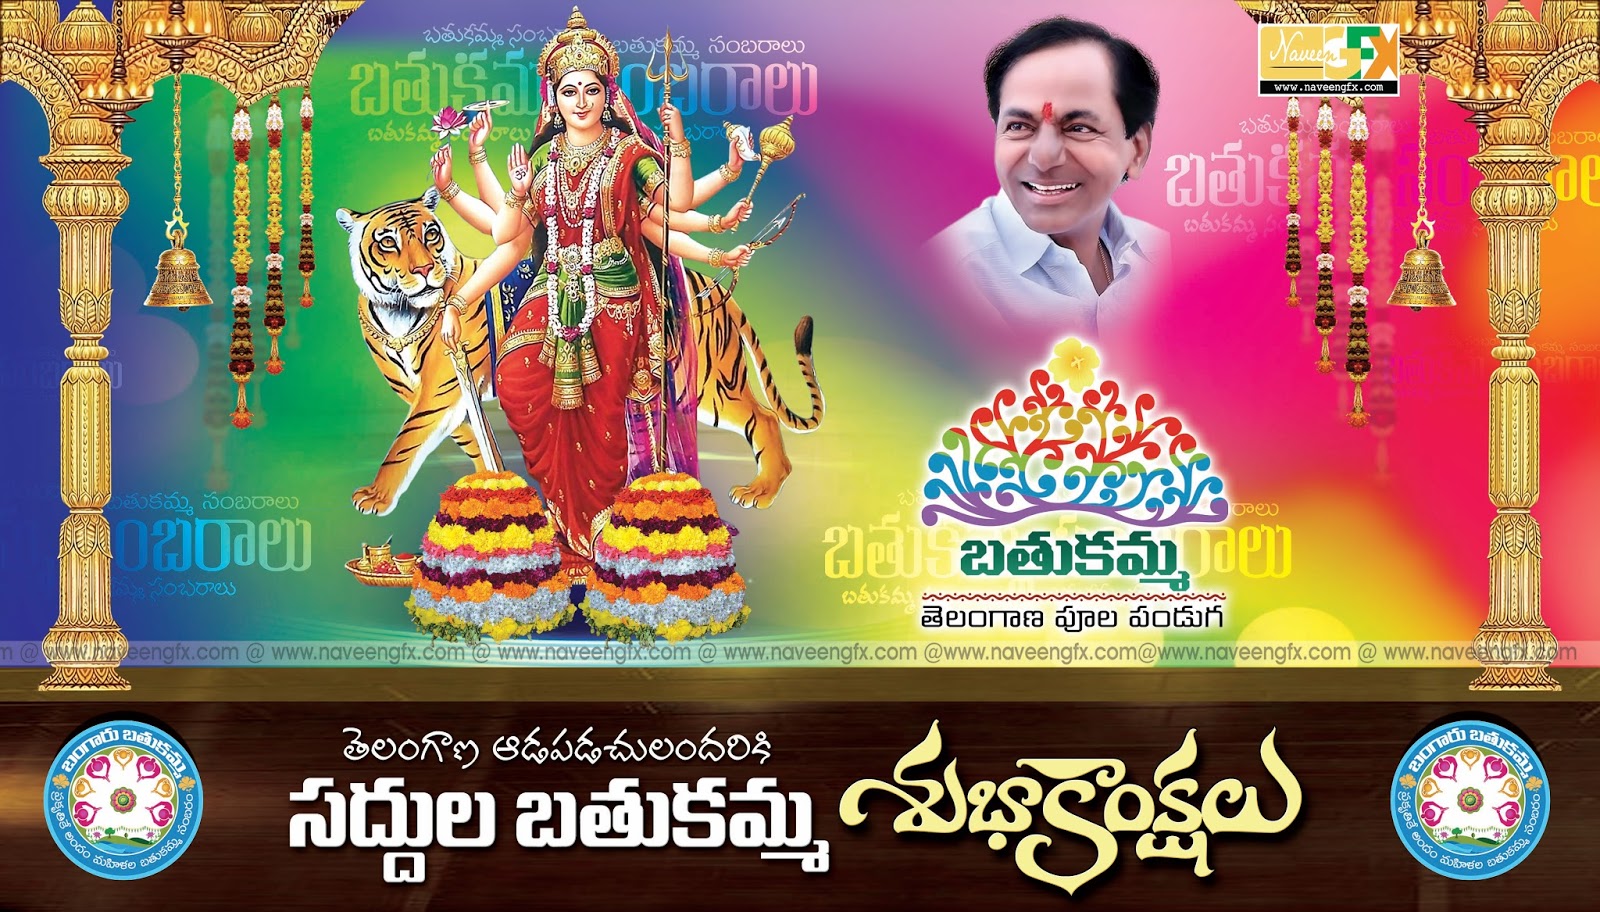 Bathukamma - Telangana's Floral Festival is here